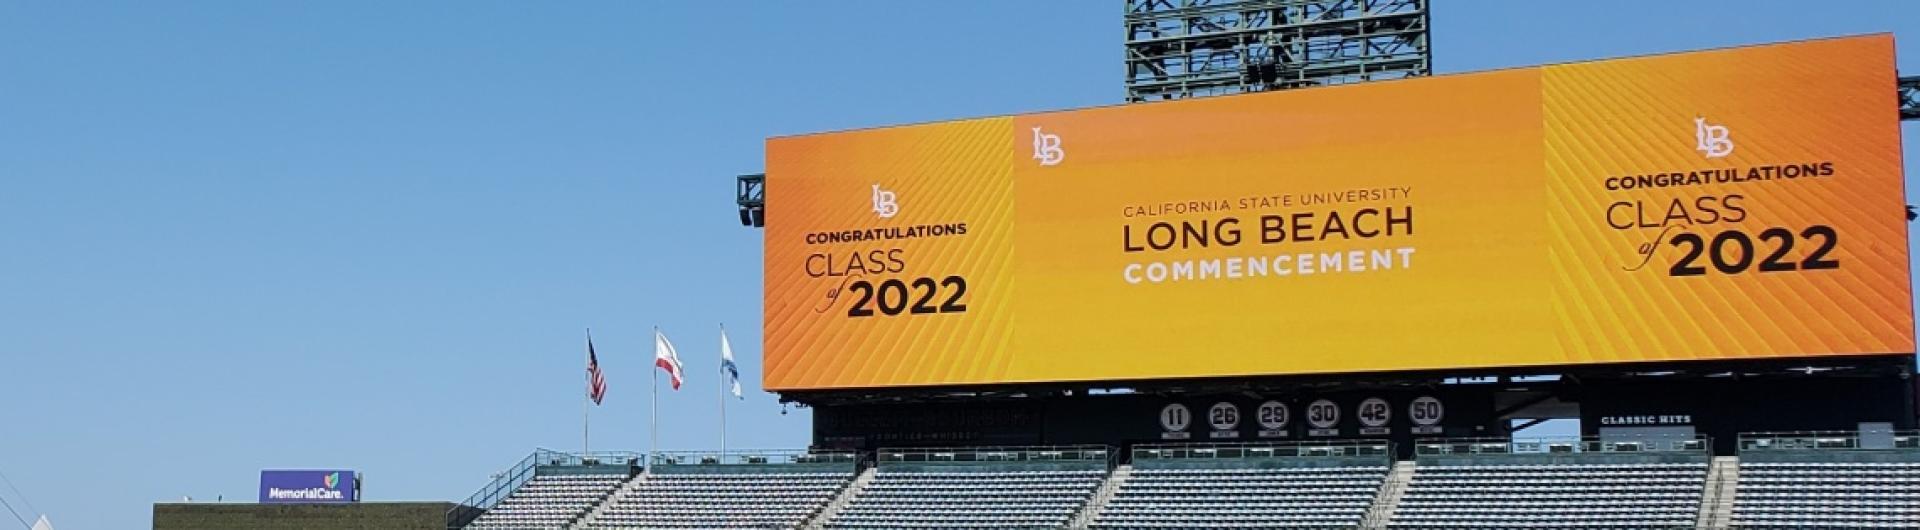 Angle Stadium 2022 commencement